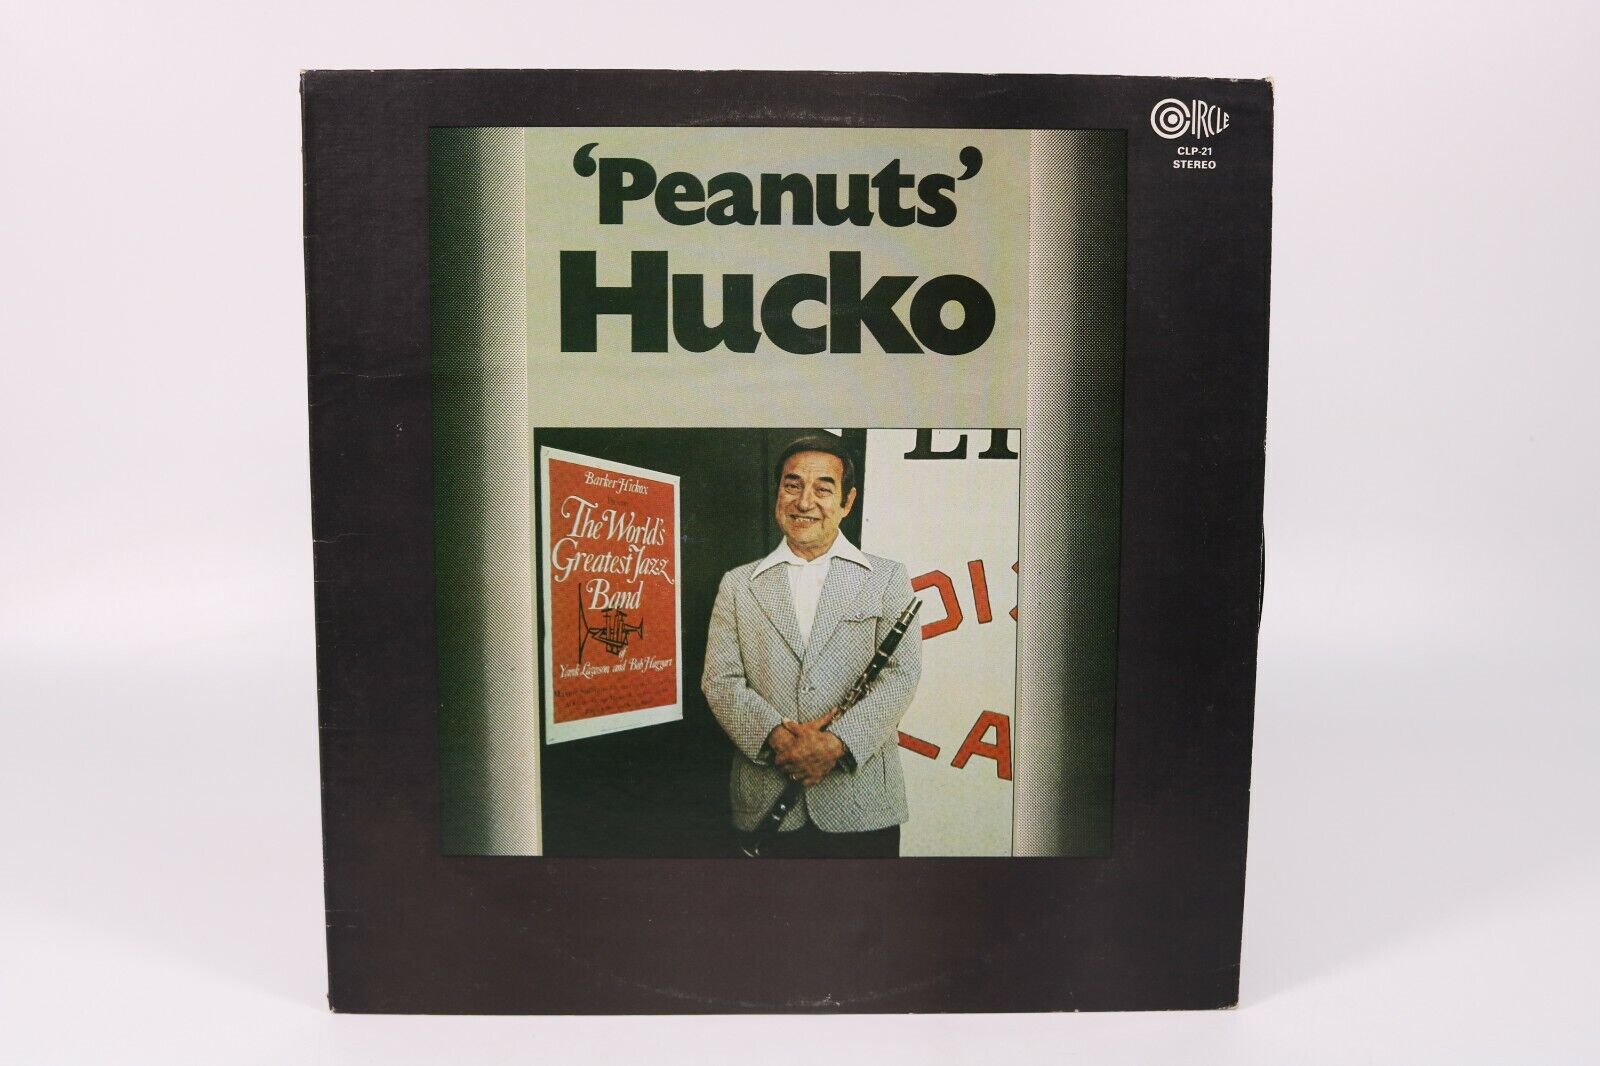 Peanuts Hucko World's Greatest Jazz Band 1981 Circle Records 33 Vinyl Record LP